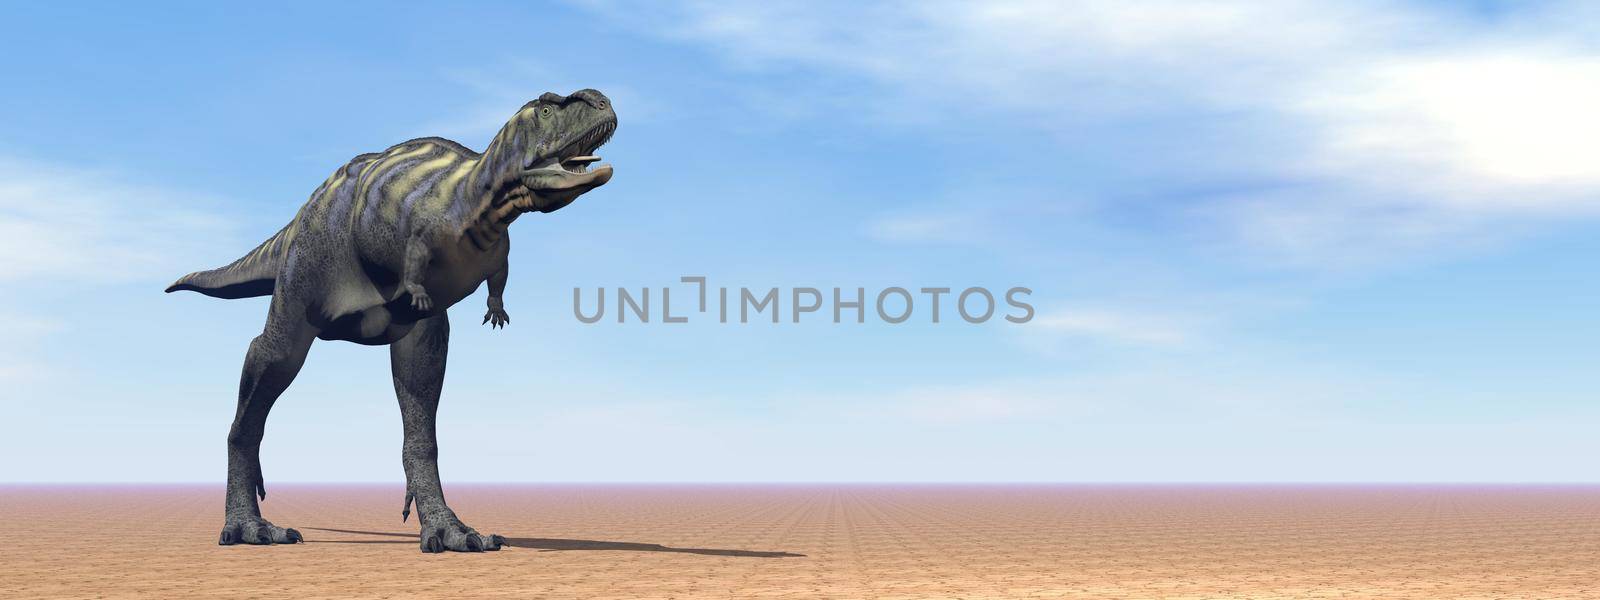 One aucasaurus dinosaur standing in the desert by daylight